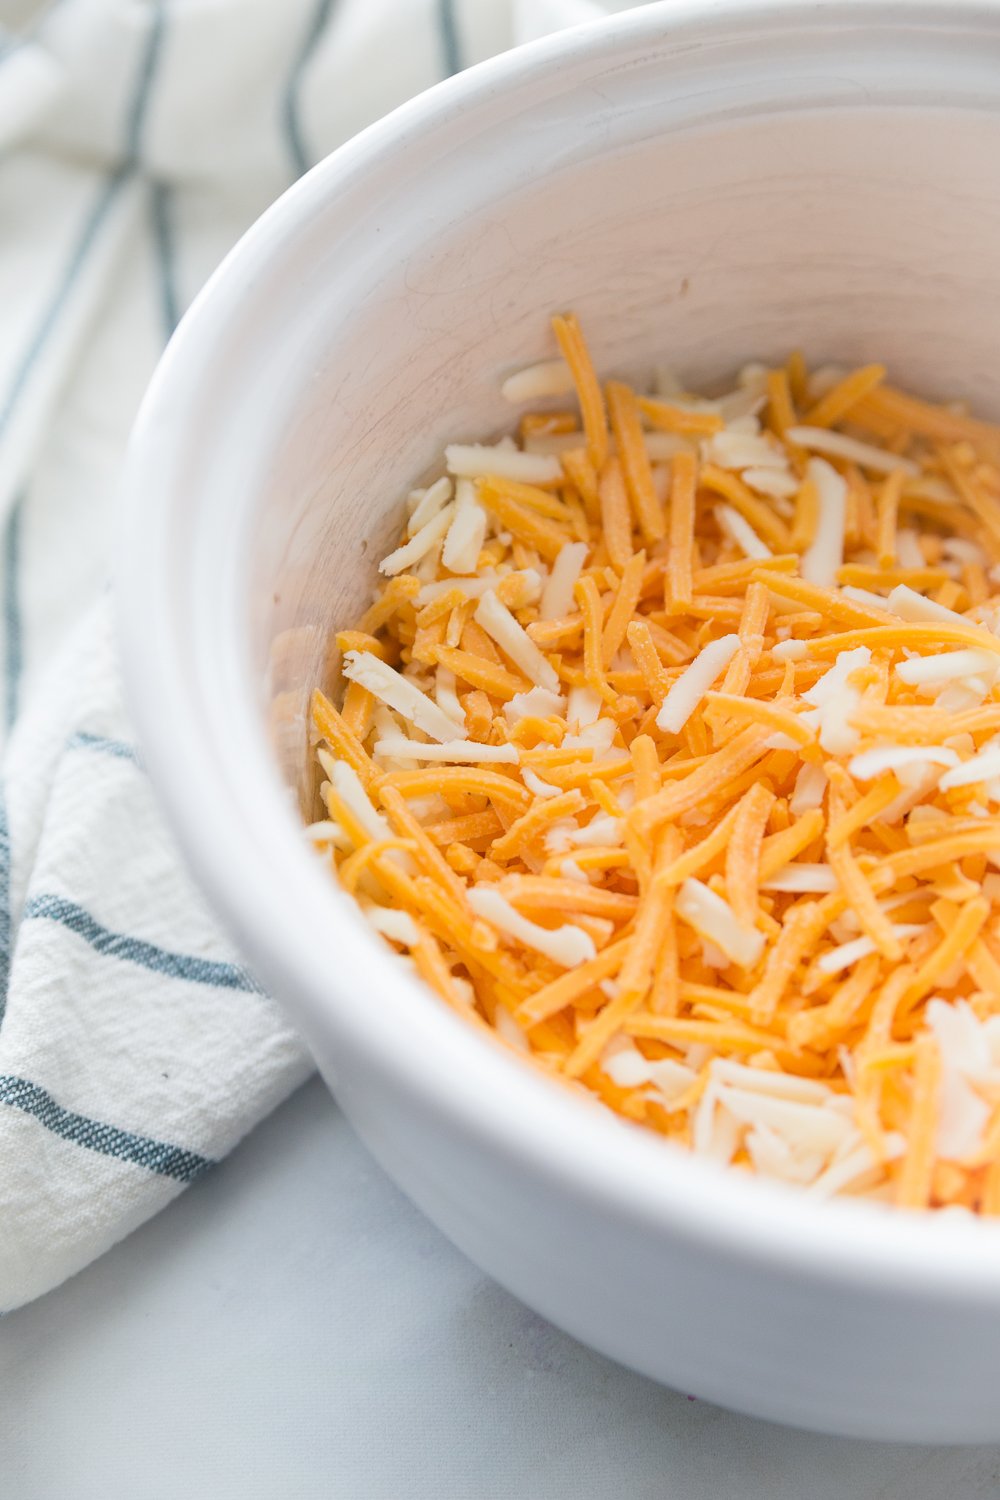 Crockpot Cheesy Cowboy Potatoes - Shredded cheese in a white bowl